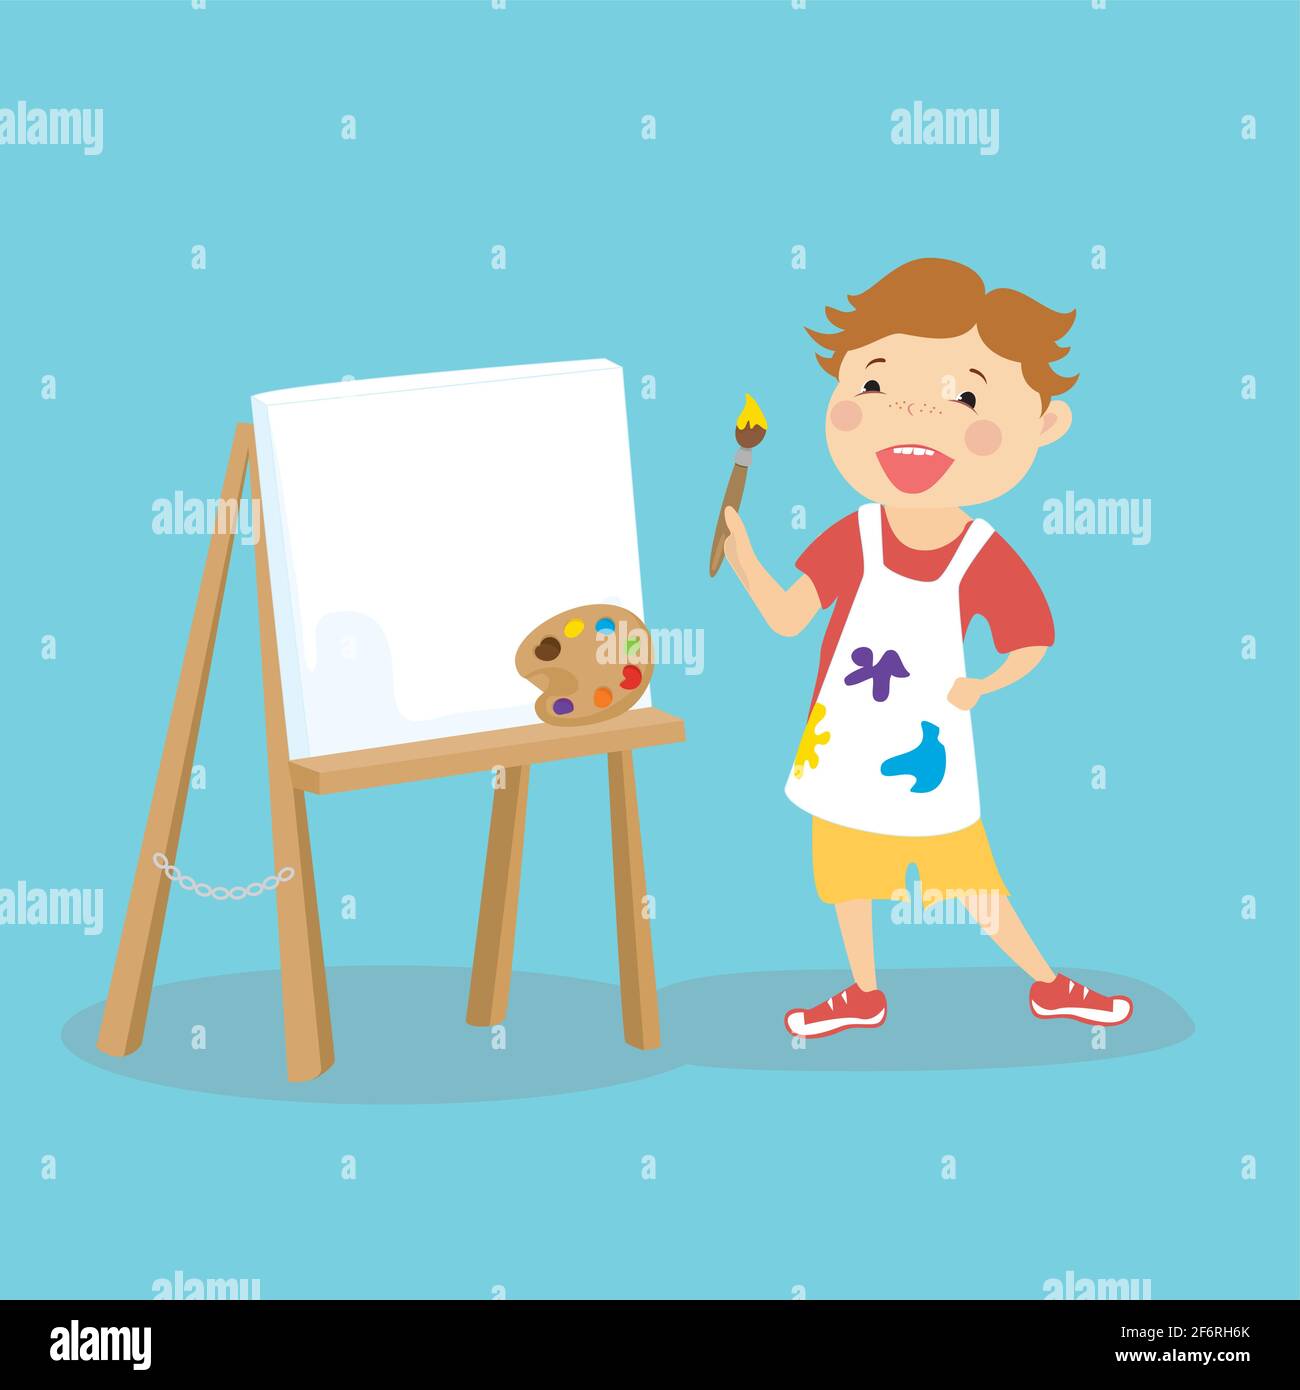 https://c8.alamy.com/comp/2F6RH6K/kid-boy-painterhappy-child-character-with-with-a-brush-and-paintsflat-vector-illustration-2F6RH6K.jpg